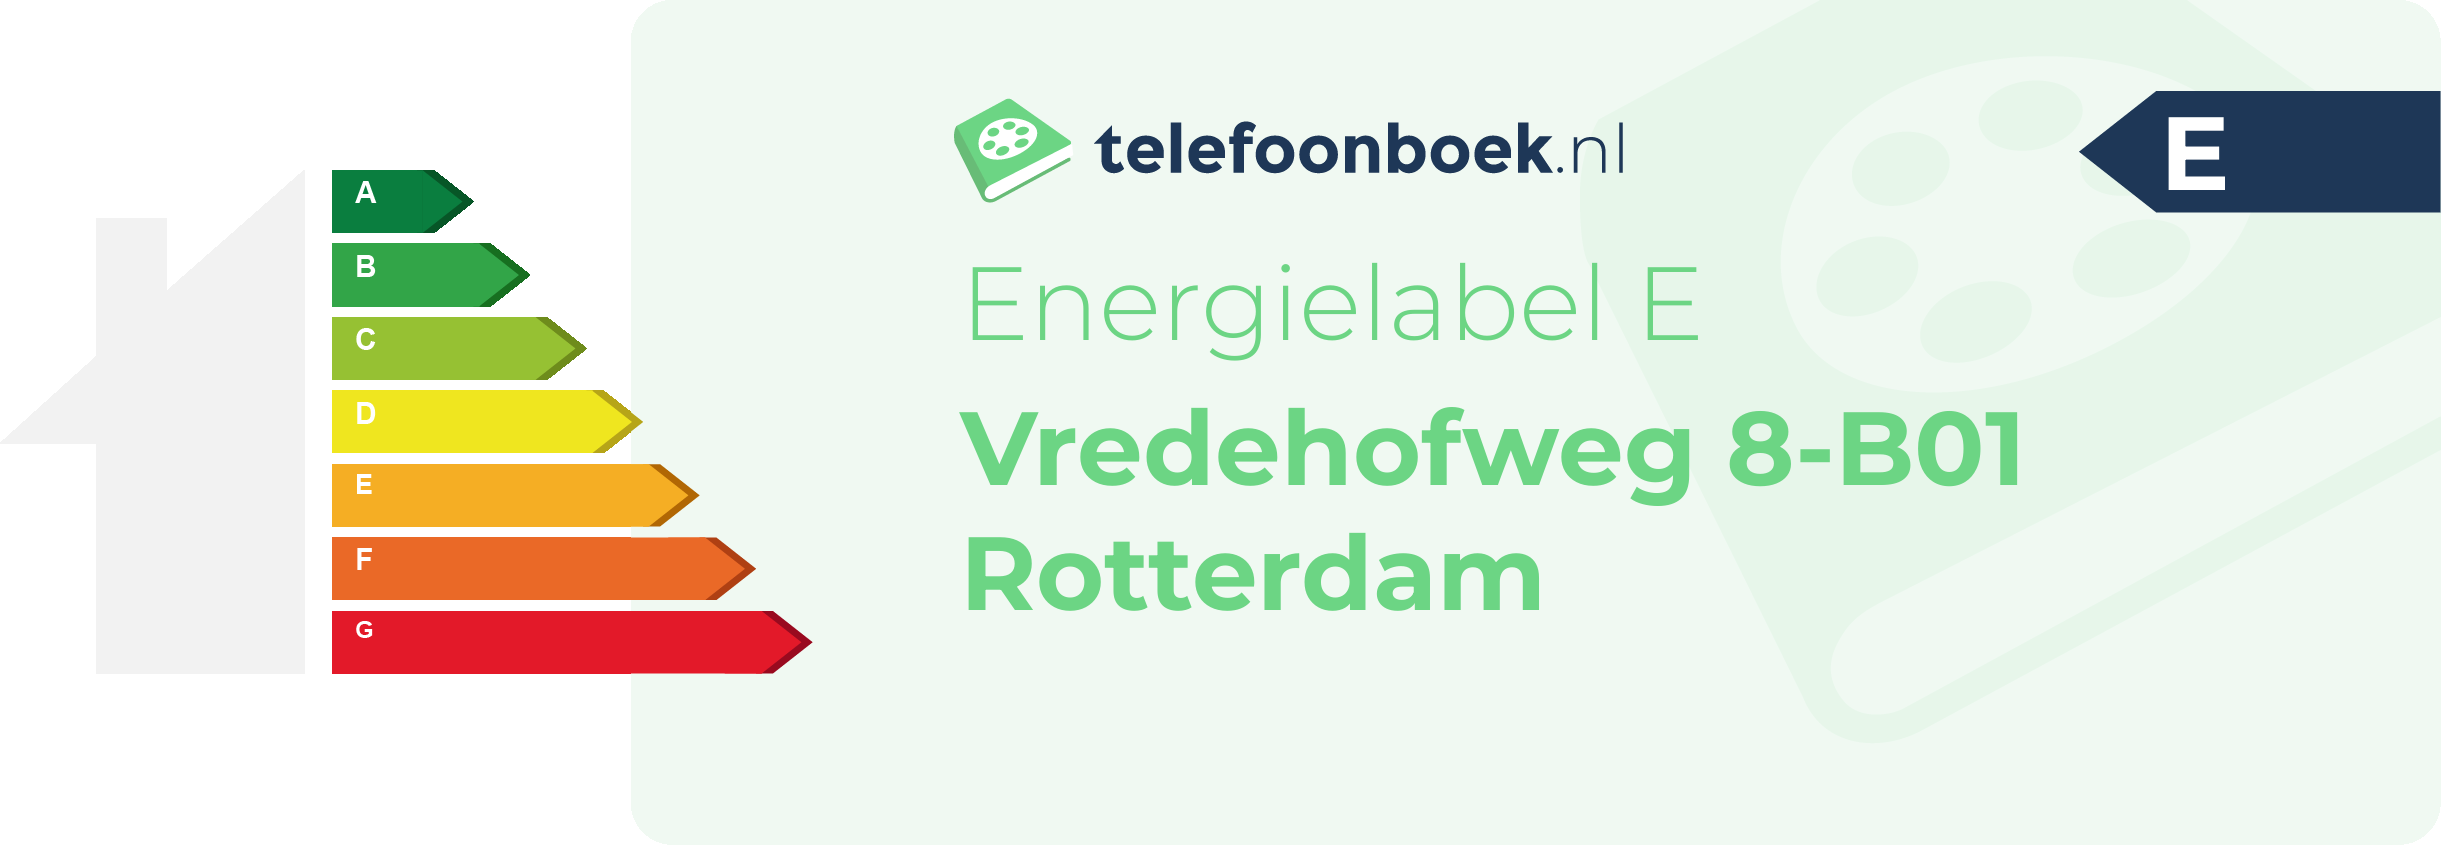 Energielabel Vredehofweg 8-B01 Rotterdam